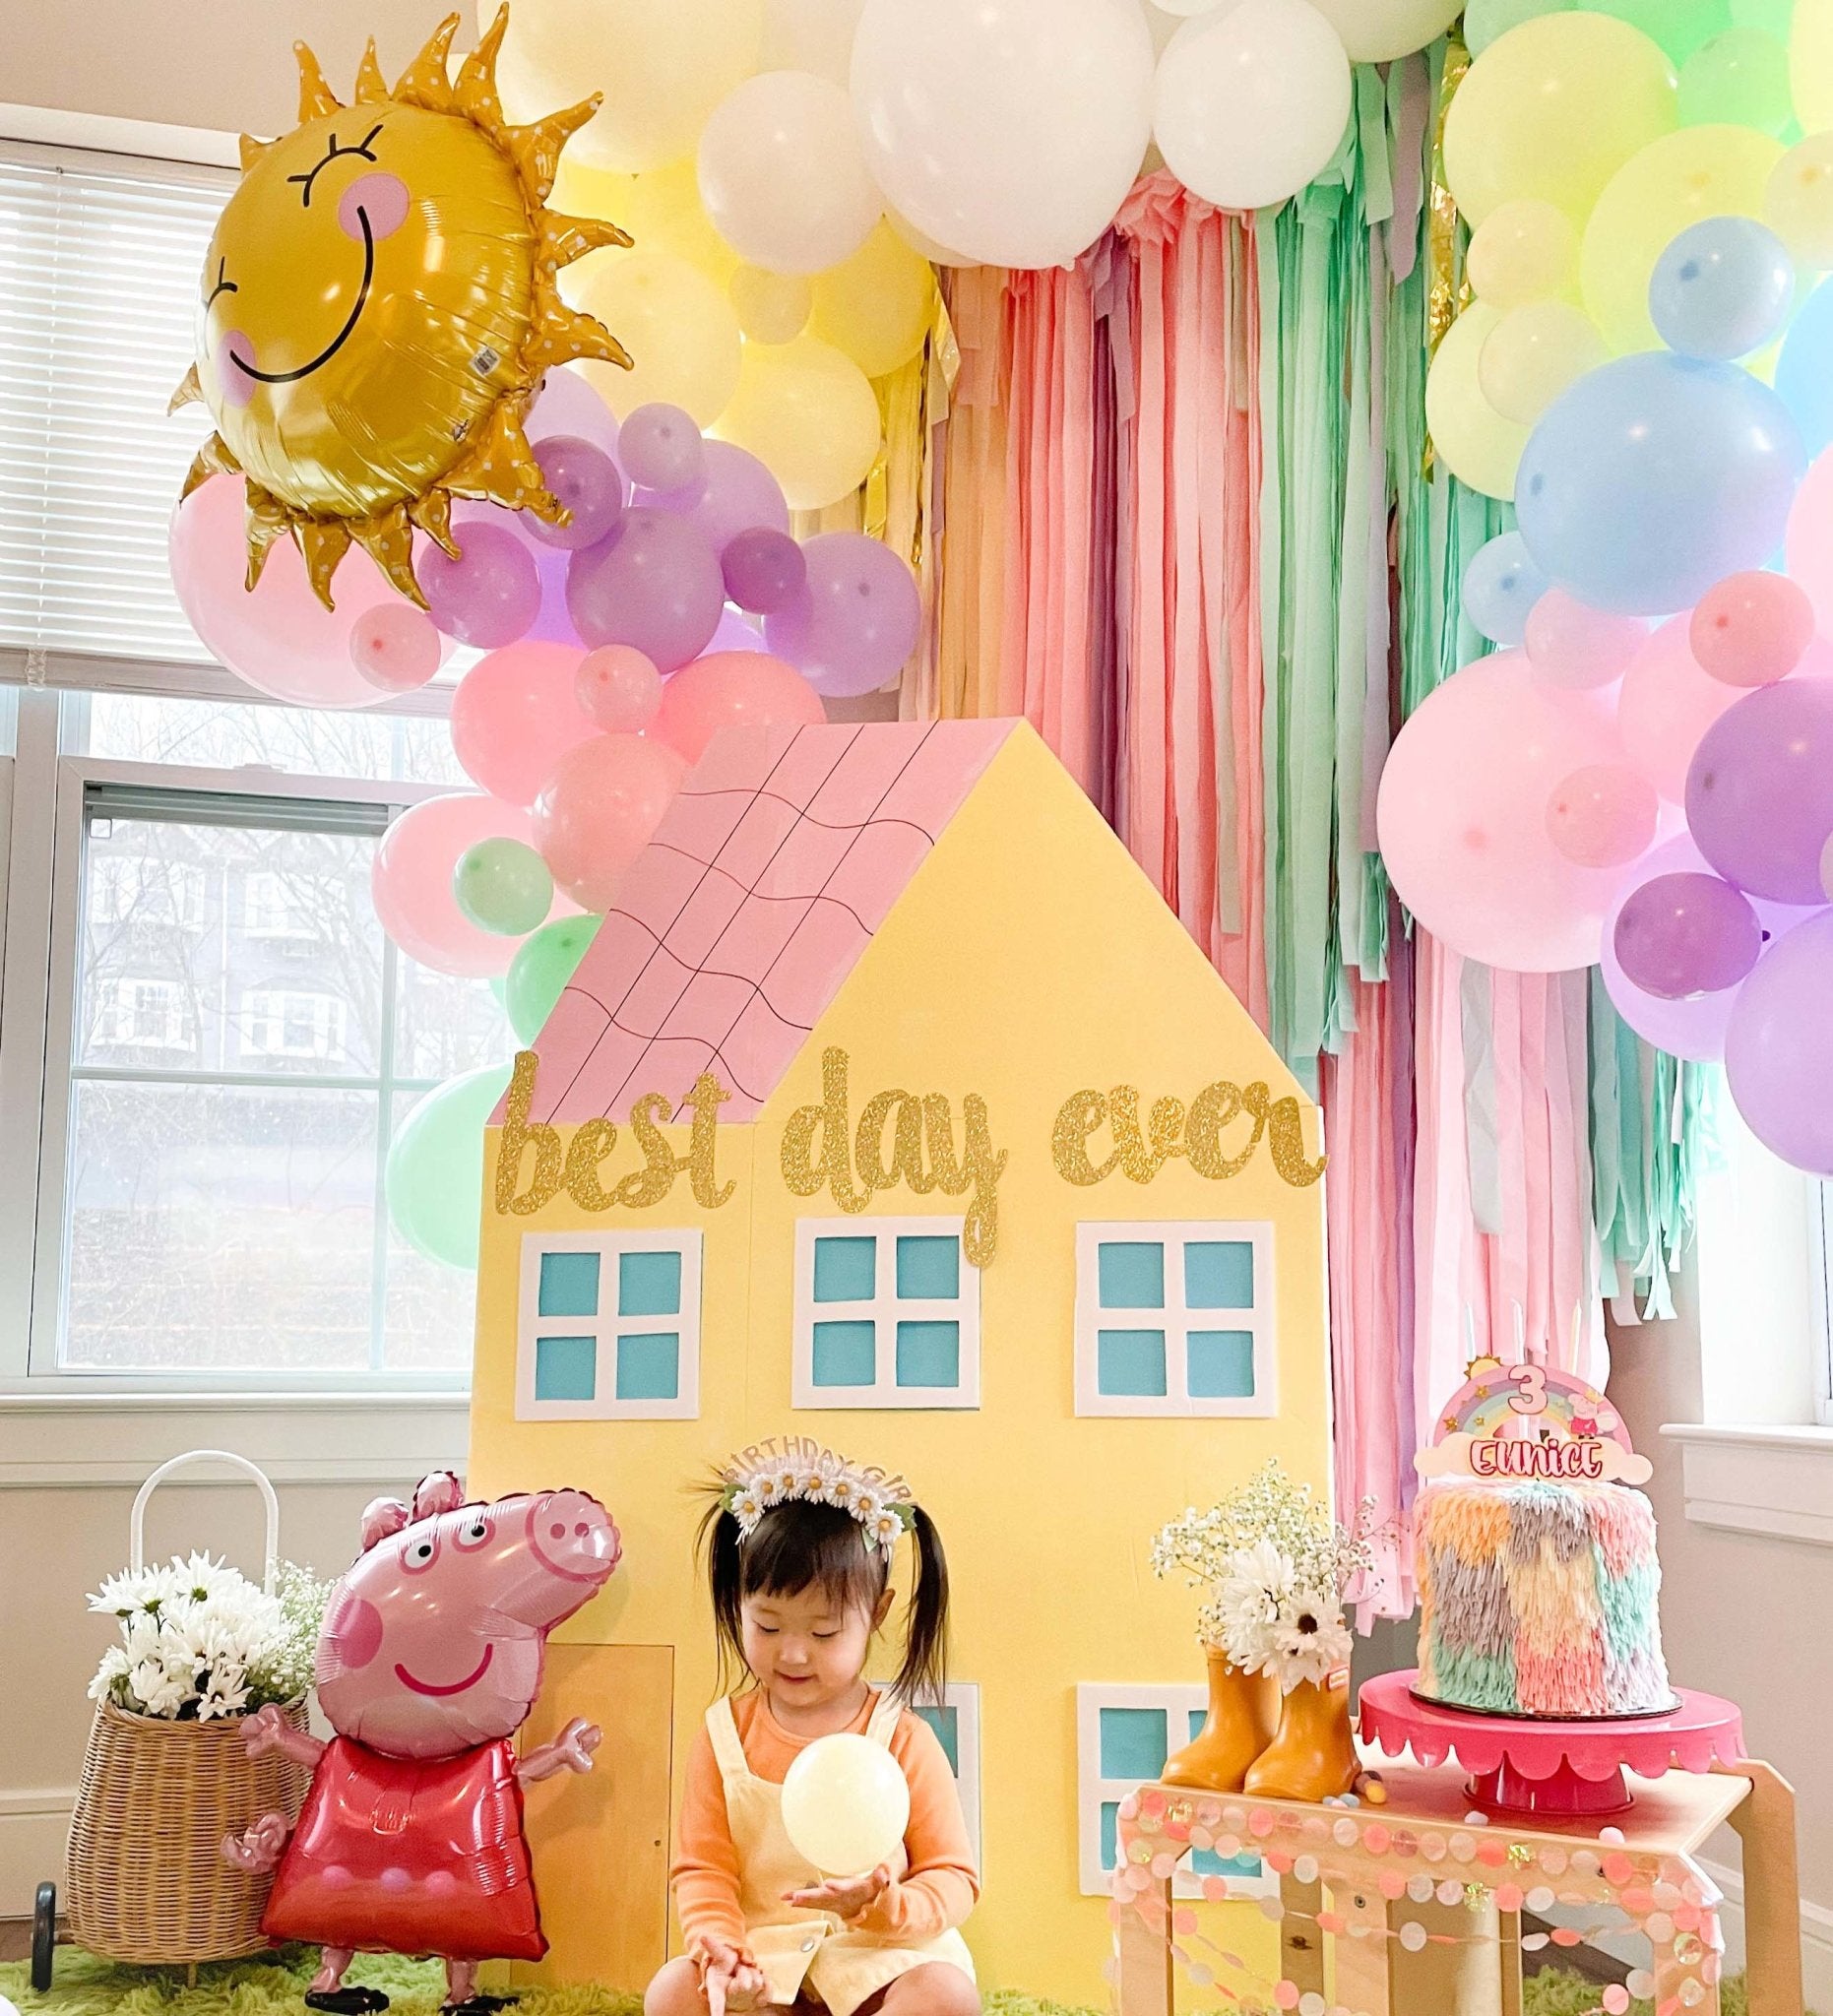 Peppa Pig Girls Birthday Set 1-8 Foil Balloon Balloon Decoration